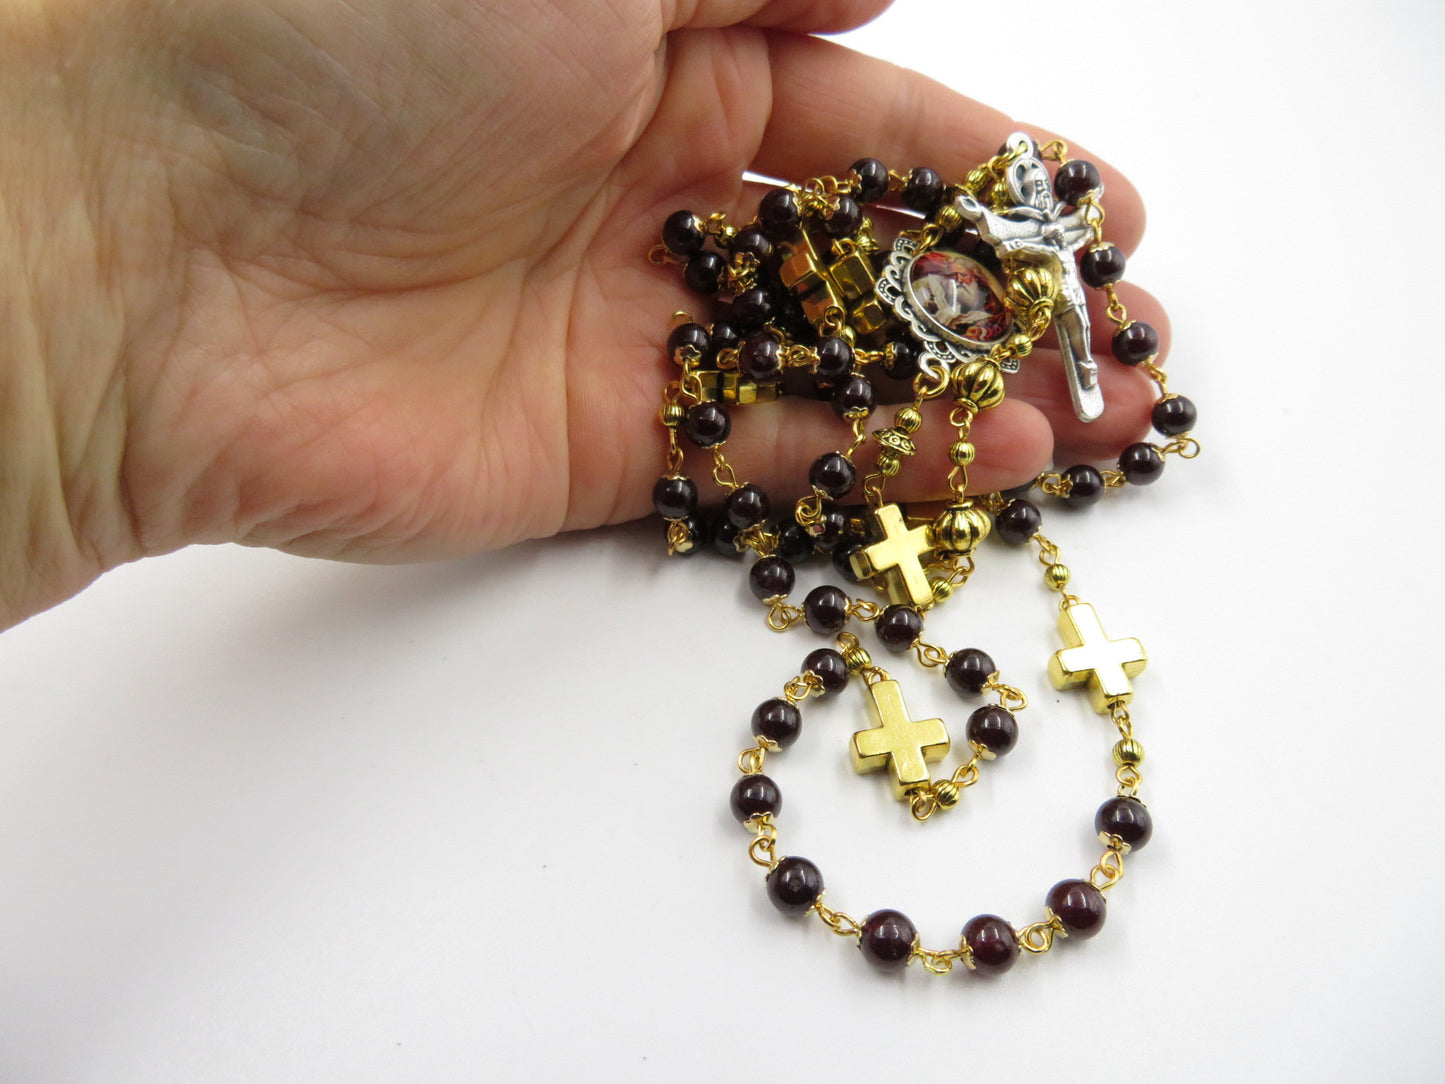 God The Father garnet gemstone prayer chaplet, Handcrafted prayer beads, Holy Trinity Crucifix prayer beads, prayer beads, Religious Gift.